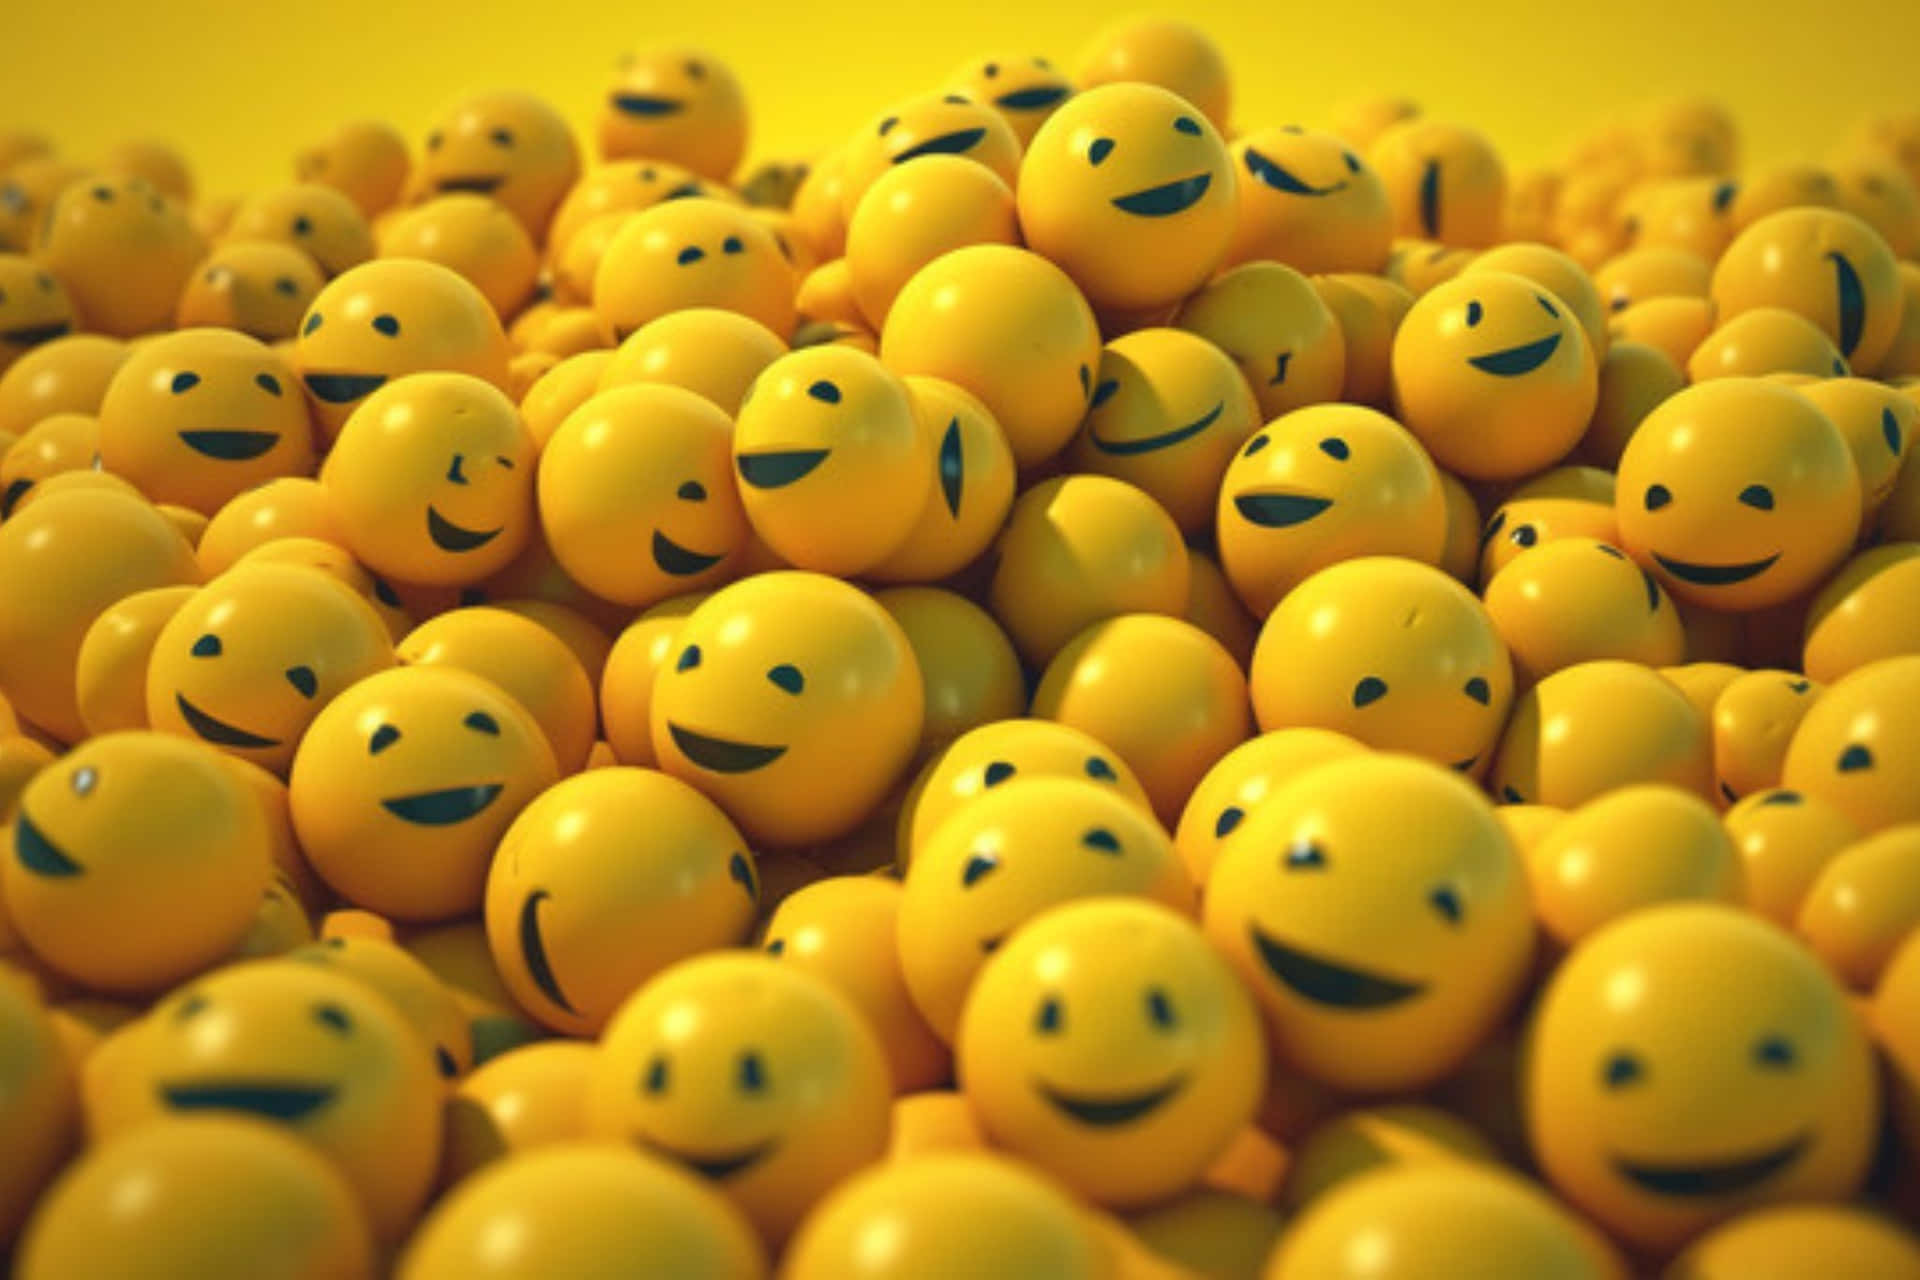 Seaof Smiles Emoji Balls.jpg Wallpaper